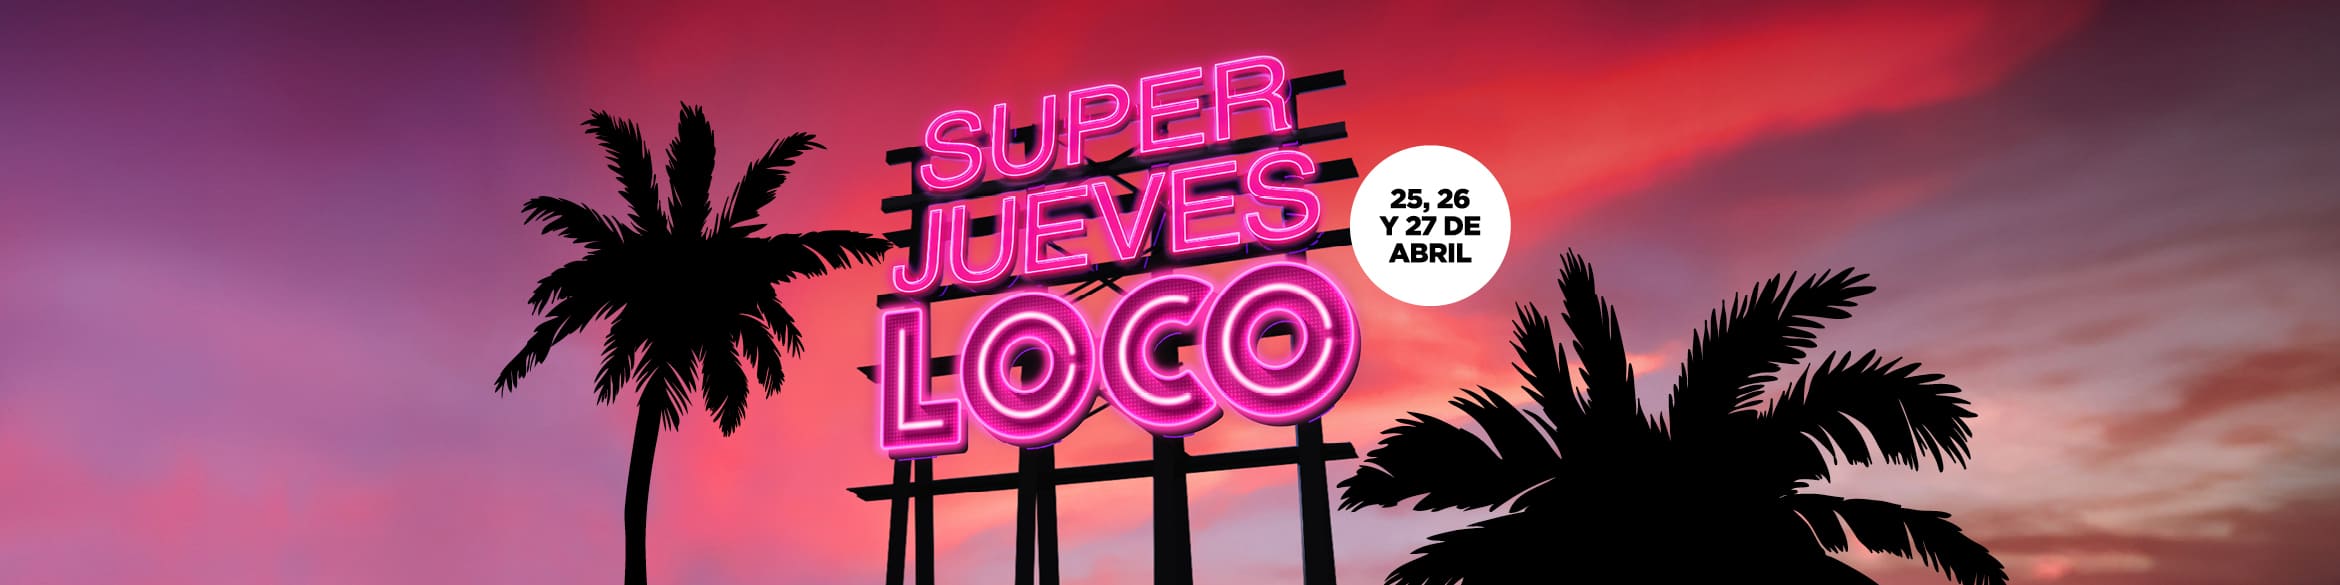 Super Jueves Loco | La Torre Outlet Zaragoza